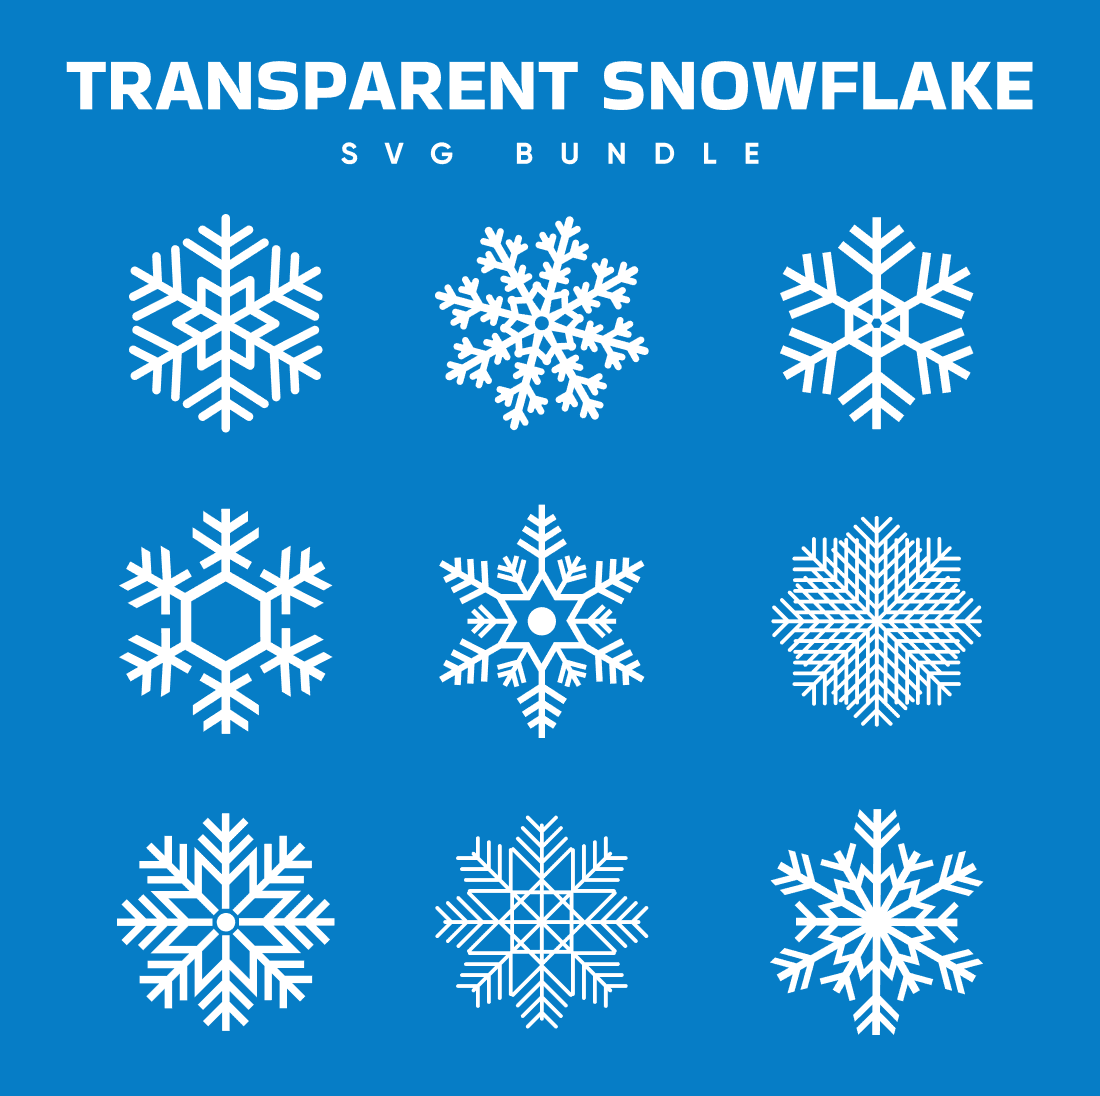 Transparent Snowflake SVG - main image preview.